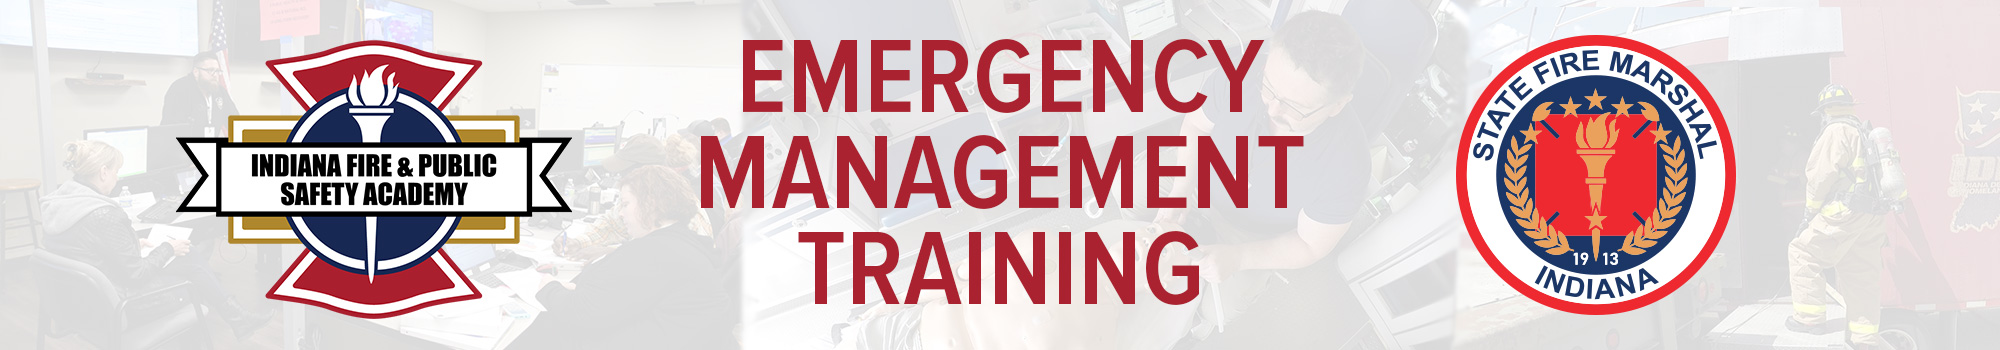 Academy Emergency Management Training banner